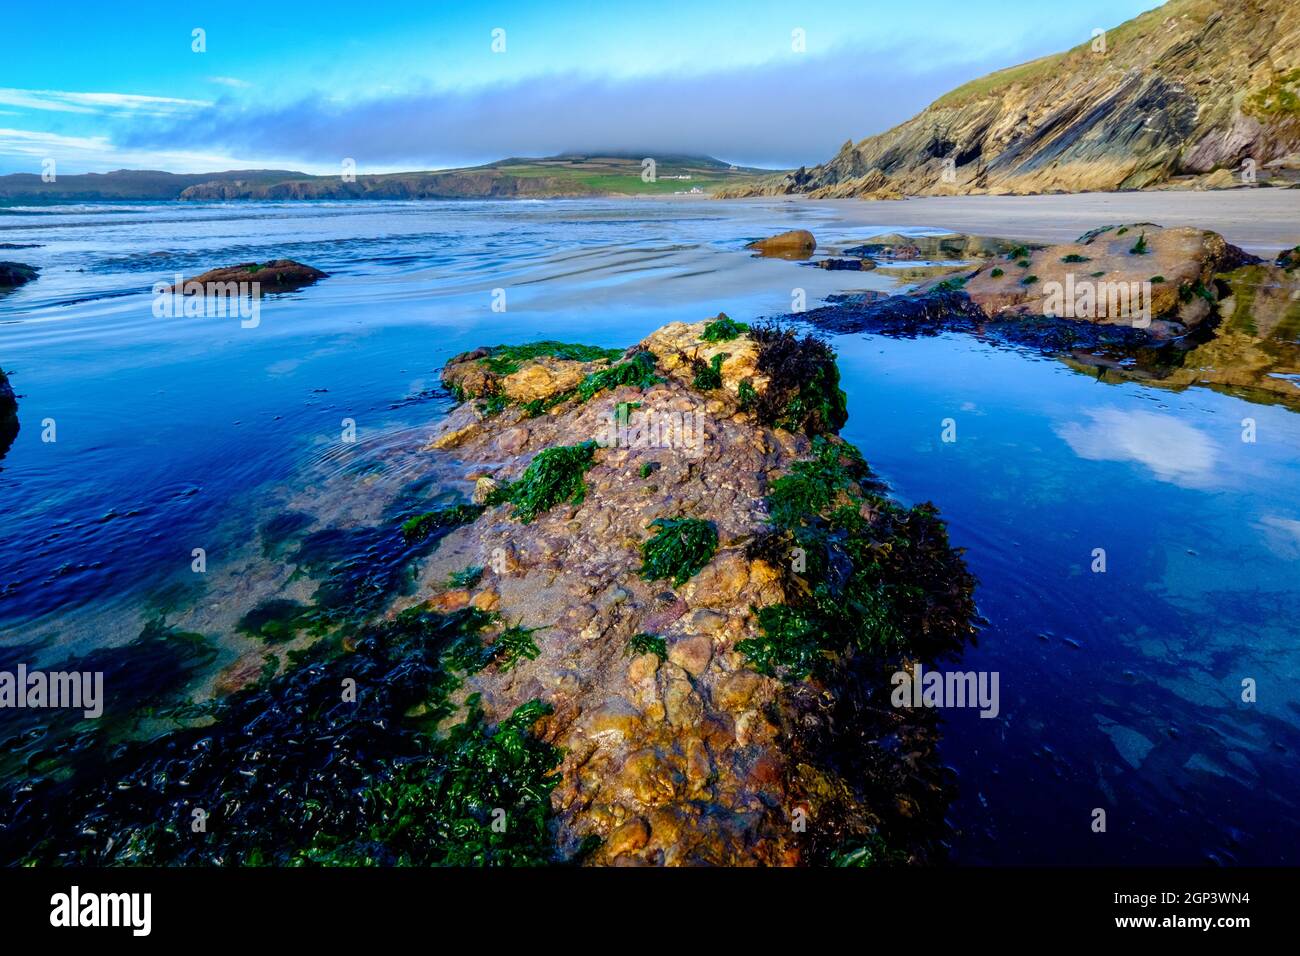 Whitesands, a popular sandy beach on the St Davids peninsula, West Wales. UK Stock Photo